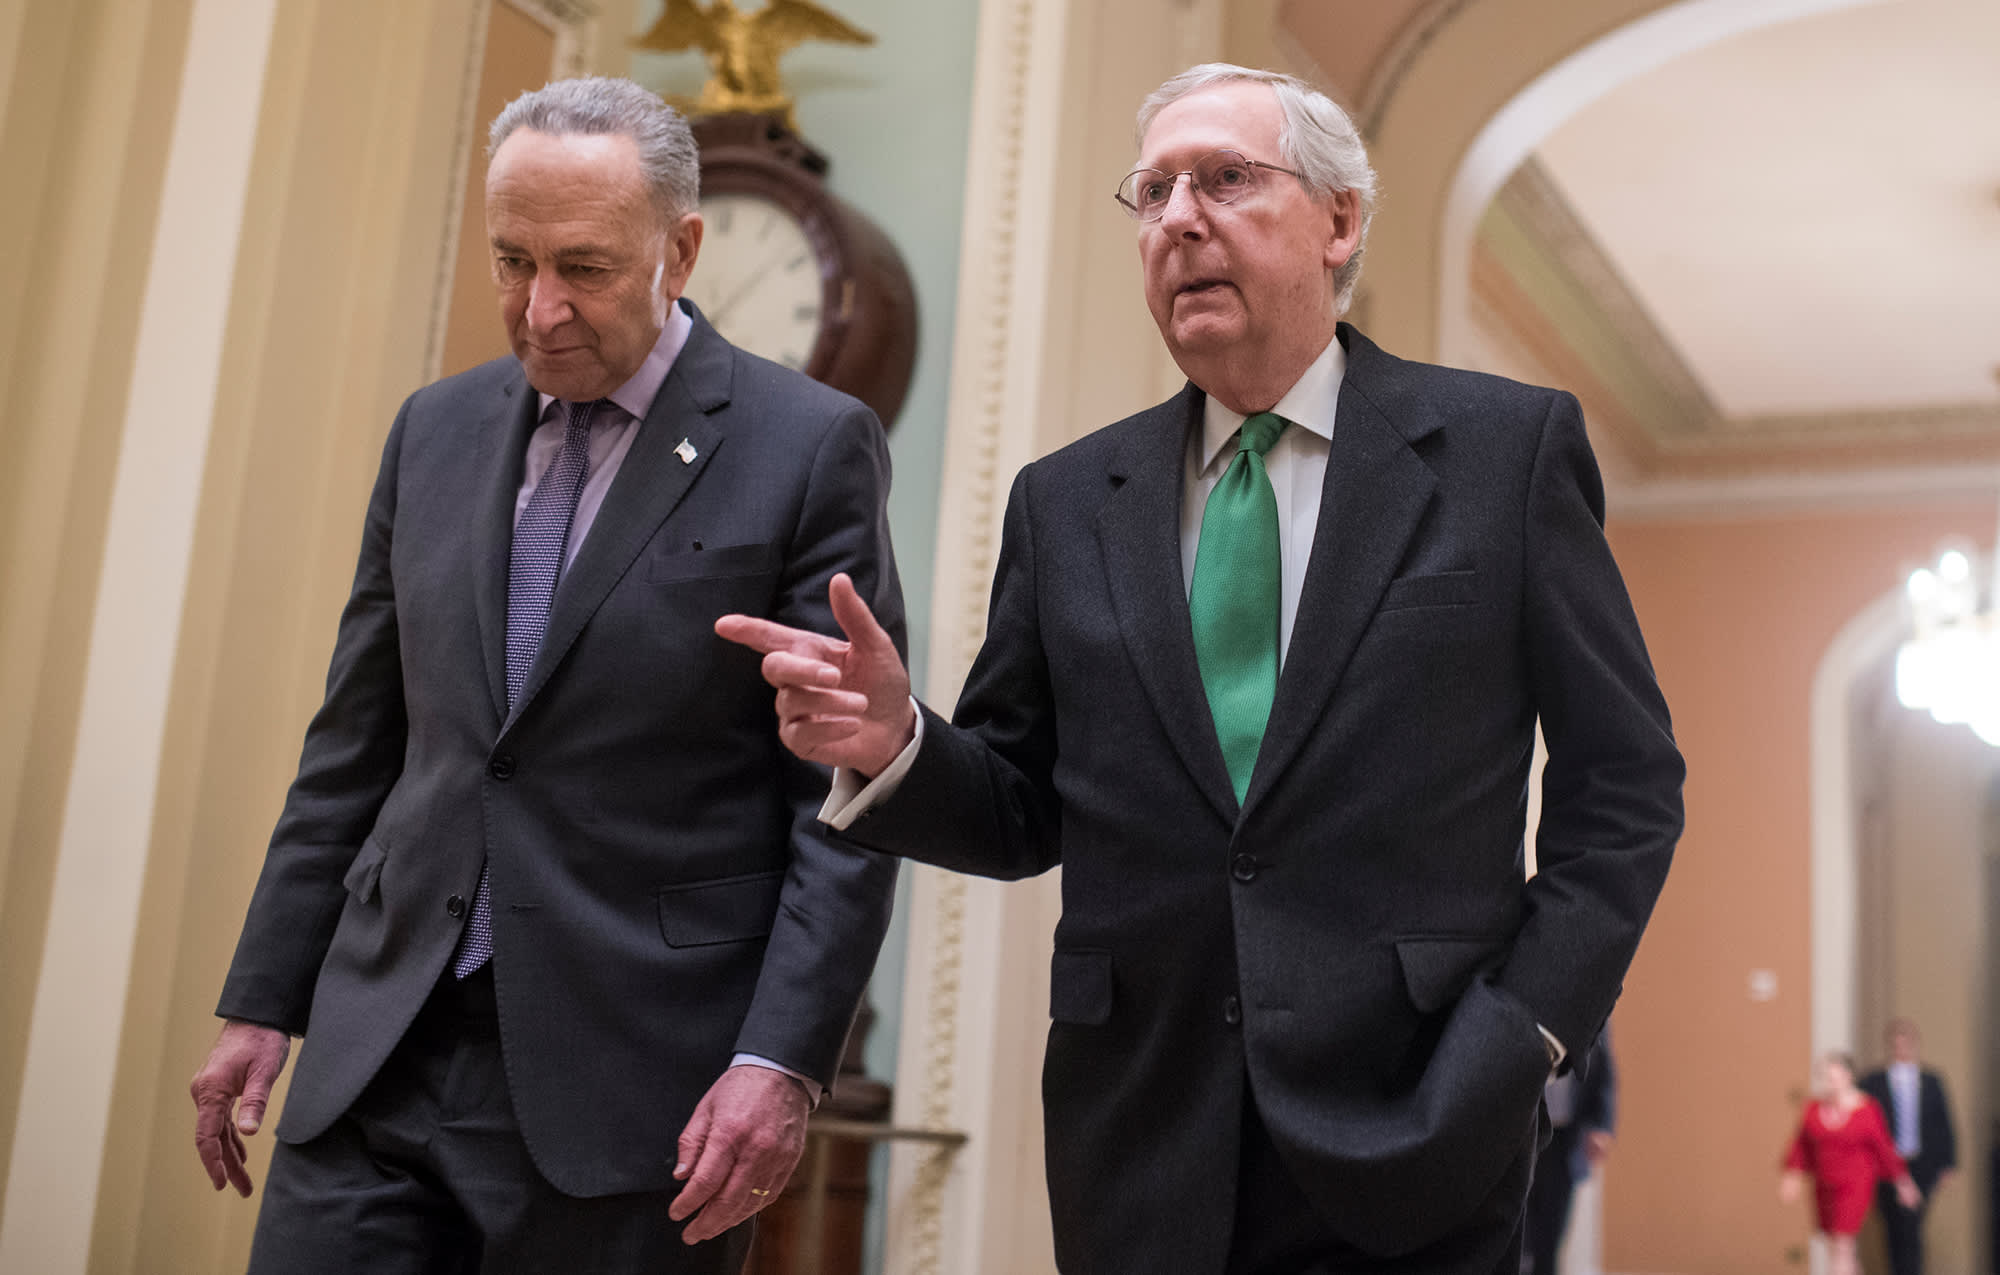 Senate passes $2 trillion coronavirus stimulus package, sending it to the House